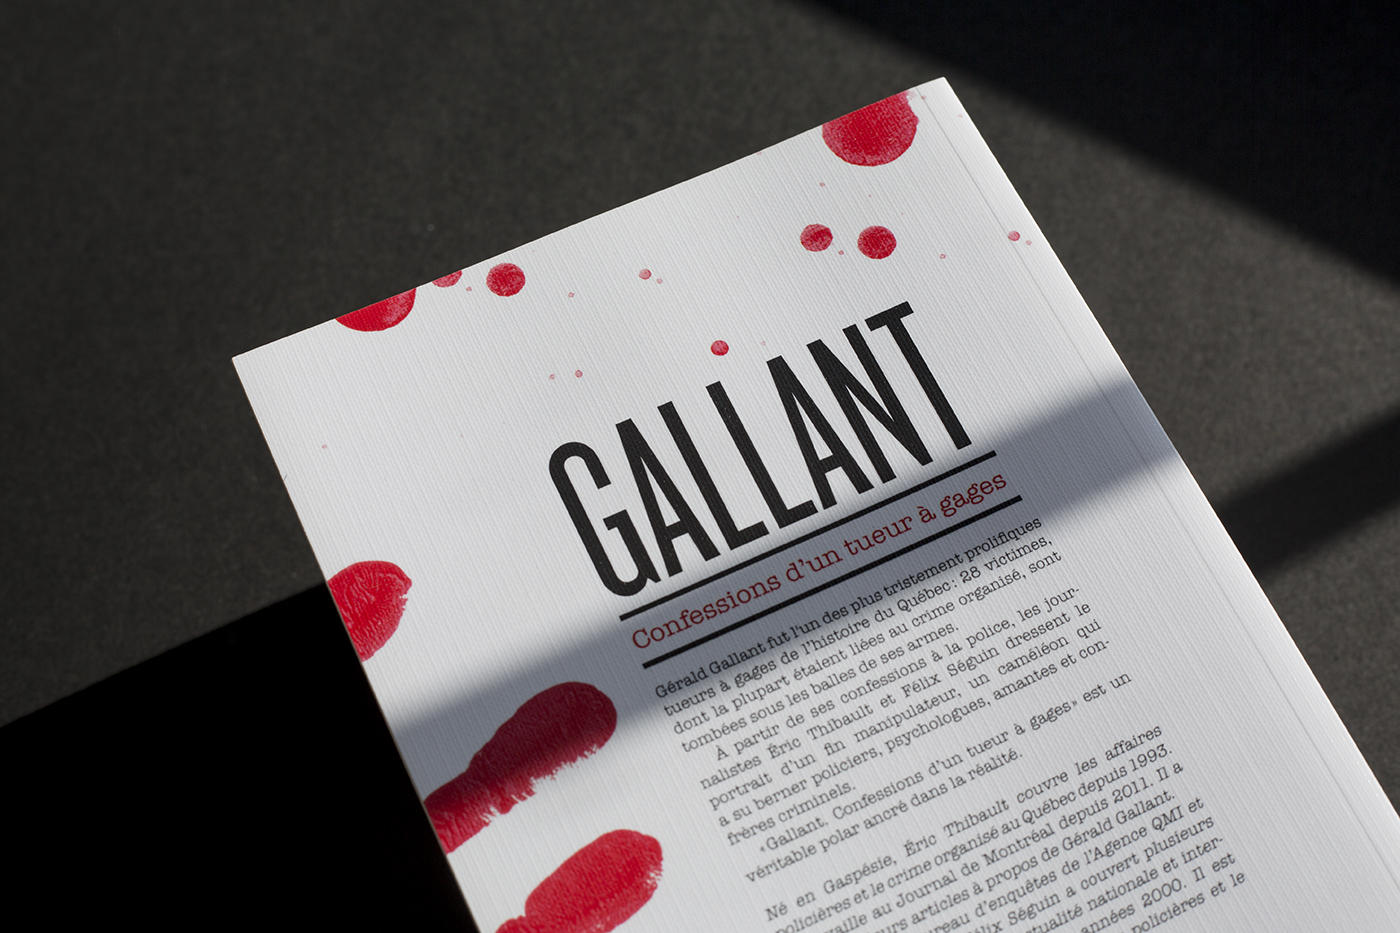 Gallant book cover blood murder triller Journal de Montréal red evidence finger print print grid spread